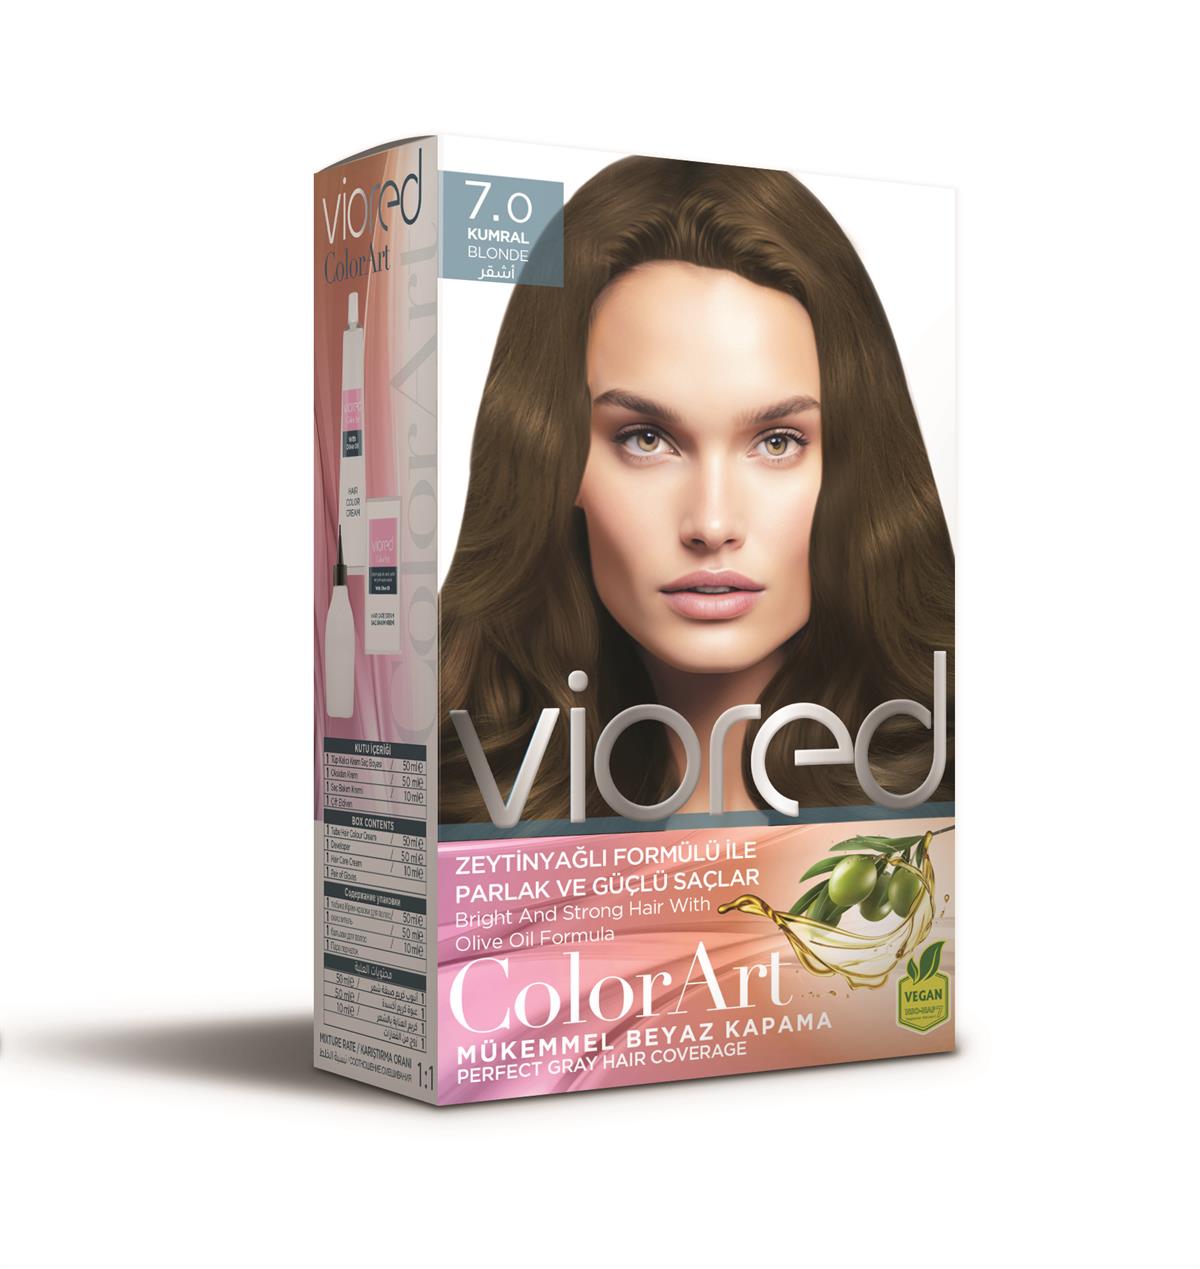 Viored Color Art 7.0 Kumral Saç Boyası